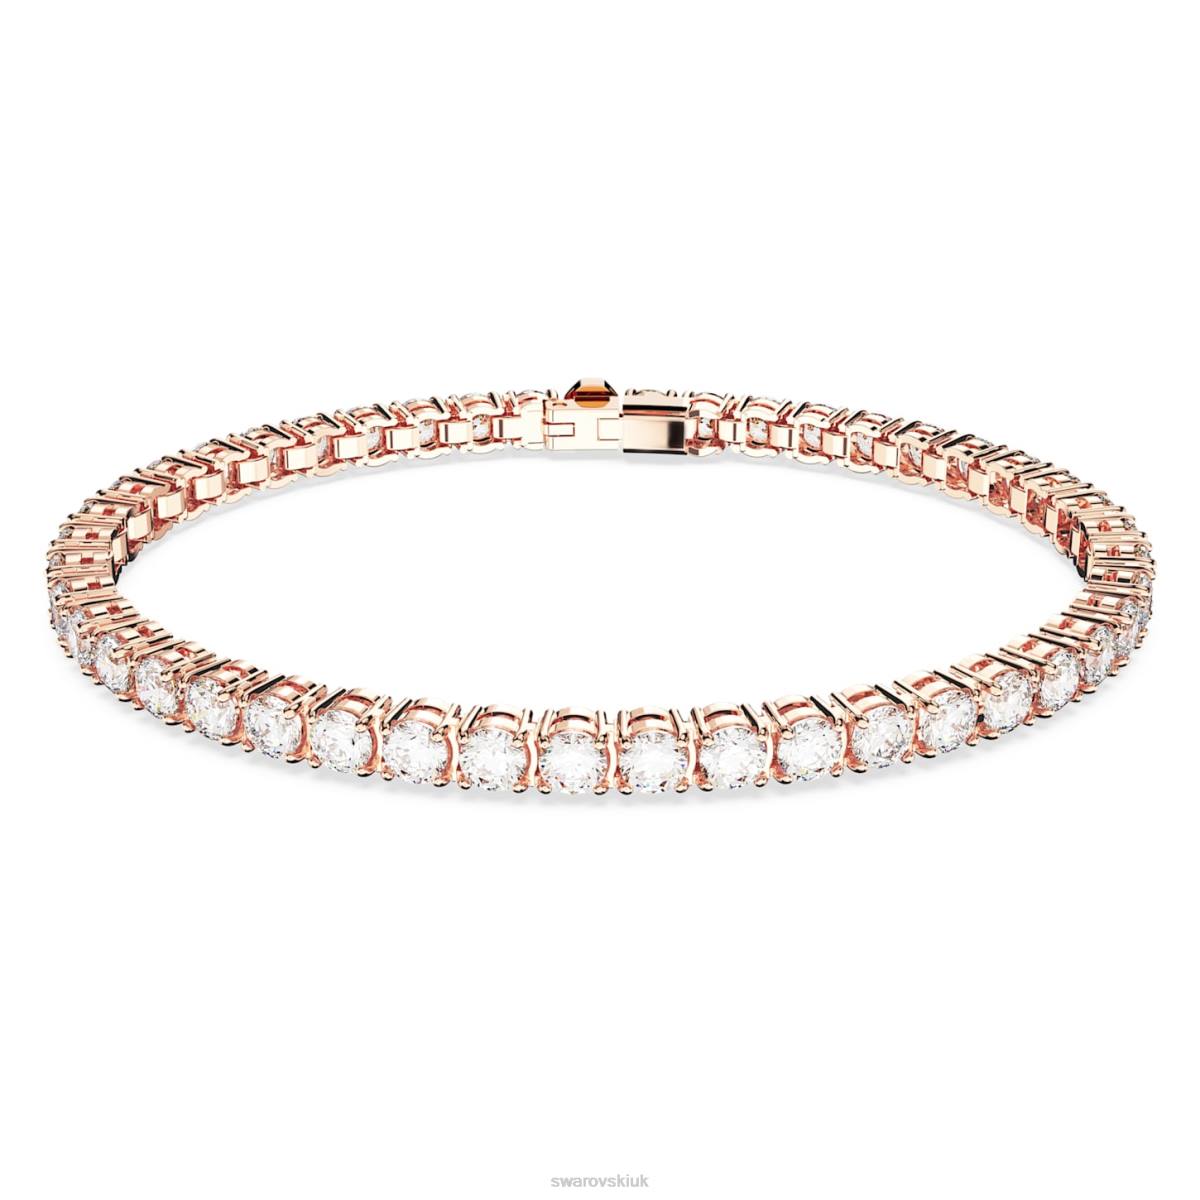 Jewelry Swarovski Matrix Tennis bracelet Round cut, White, Rose gold-tone plated 48JX552